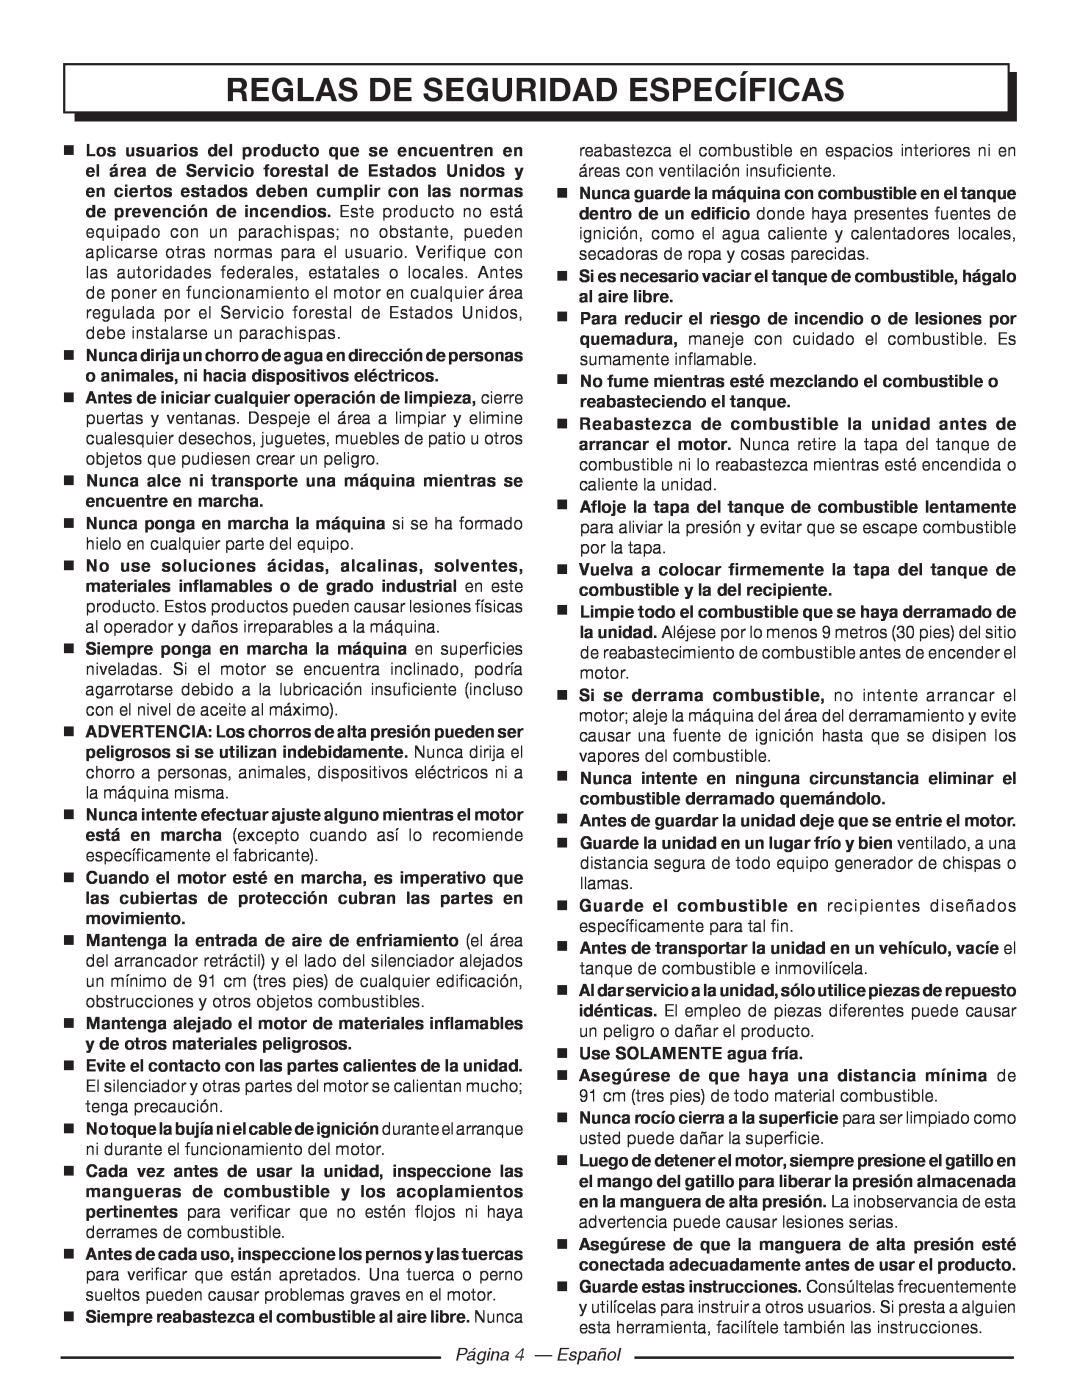 Homelite UT80953, UT80522 manuel dutilisation Página 4 - Español, Reglas De Seguridad Específicas 